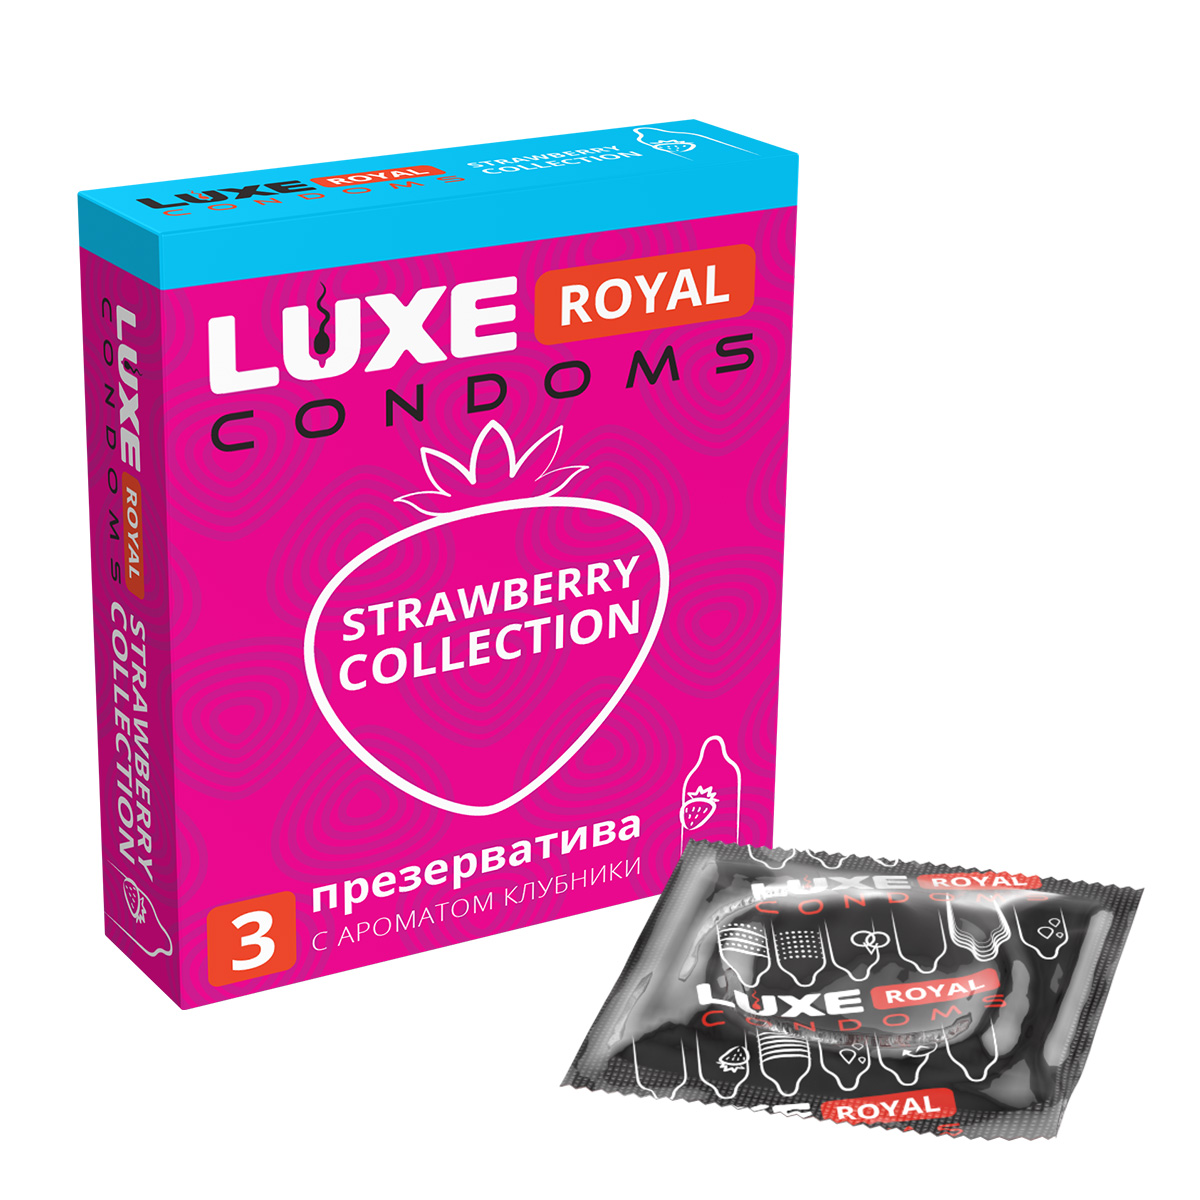 Collection strawberry. Презервативы Luxe condoms отзывы. Презервативы Luxe Royal 1х24. Luxe Royal презервативы вишня. Cheese Royal Strawberry.